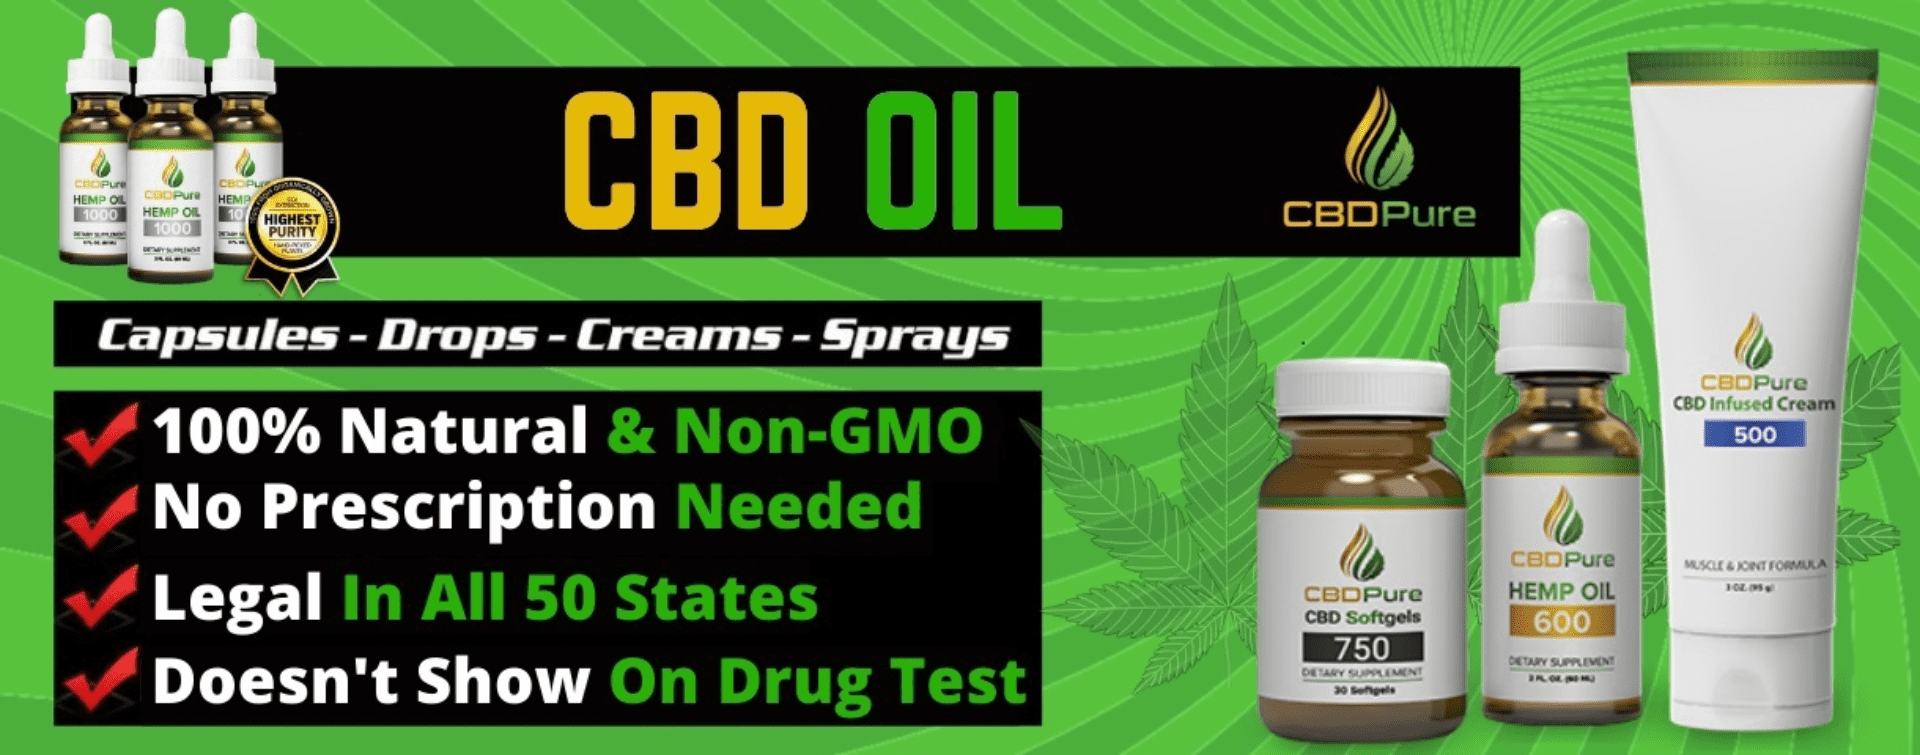 CBD Oil Capsules - CBD Oil Drops